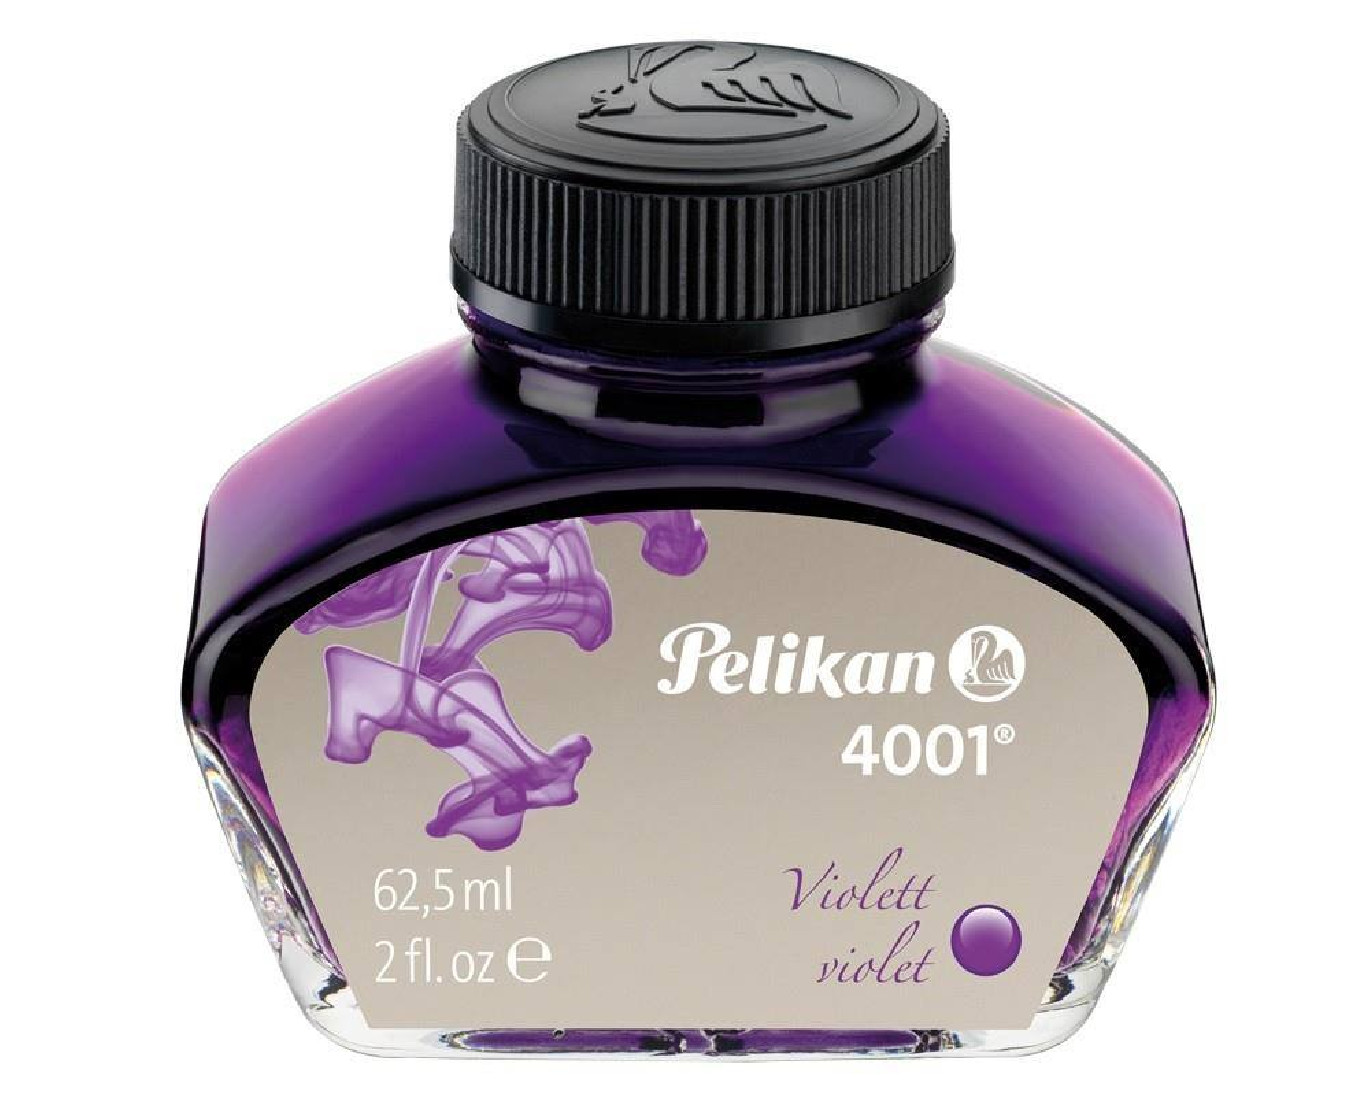 Pelikan 4001 Violet 62,5ml Fountain pen ink